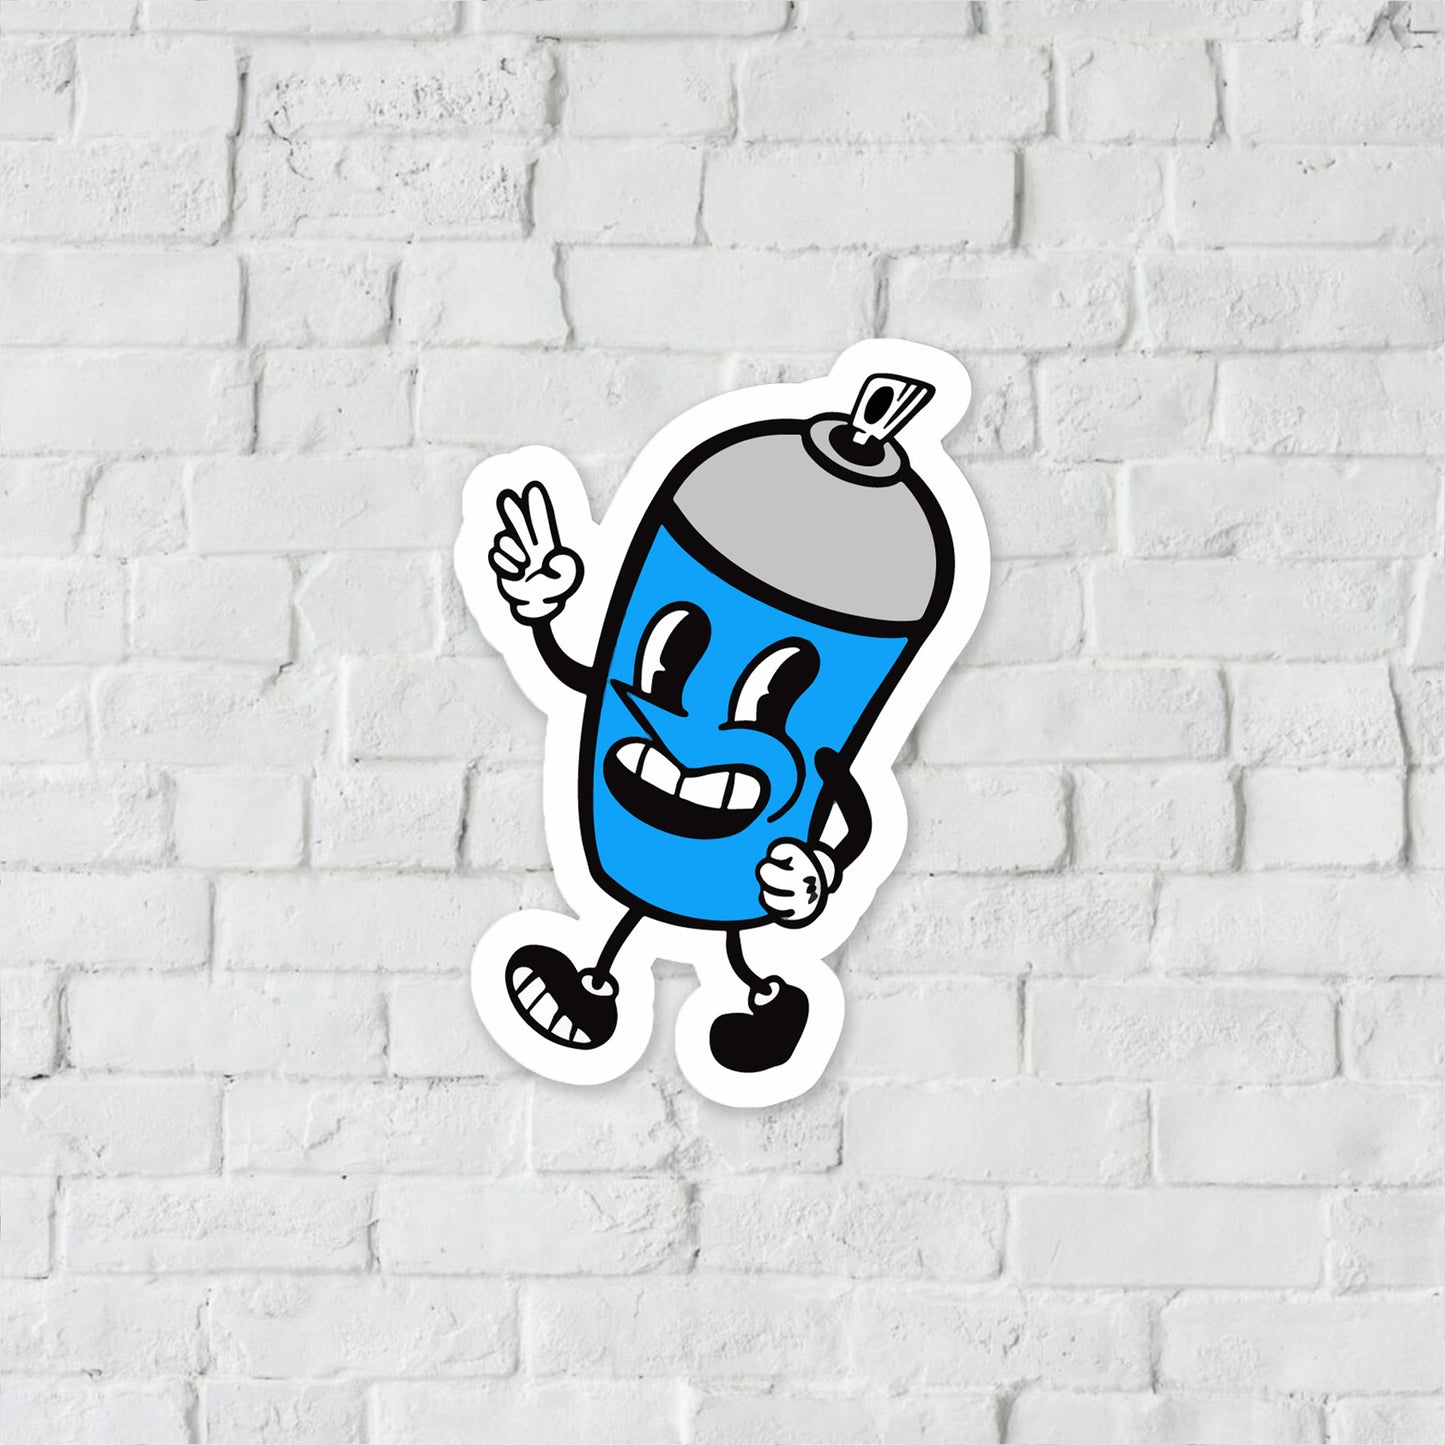 Blue spray paint can cartoon character sticker decal.